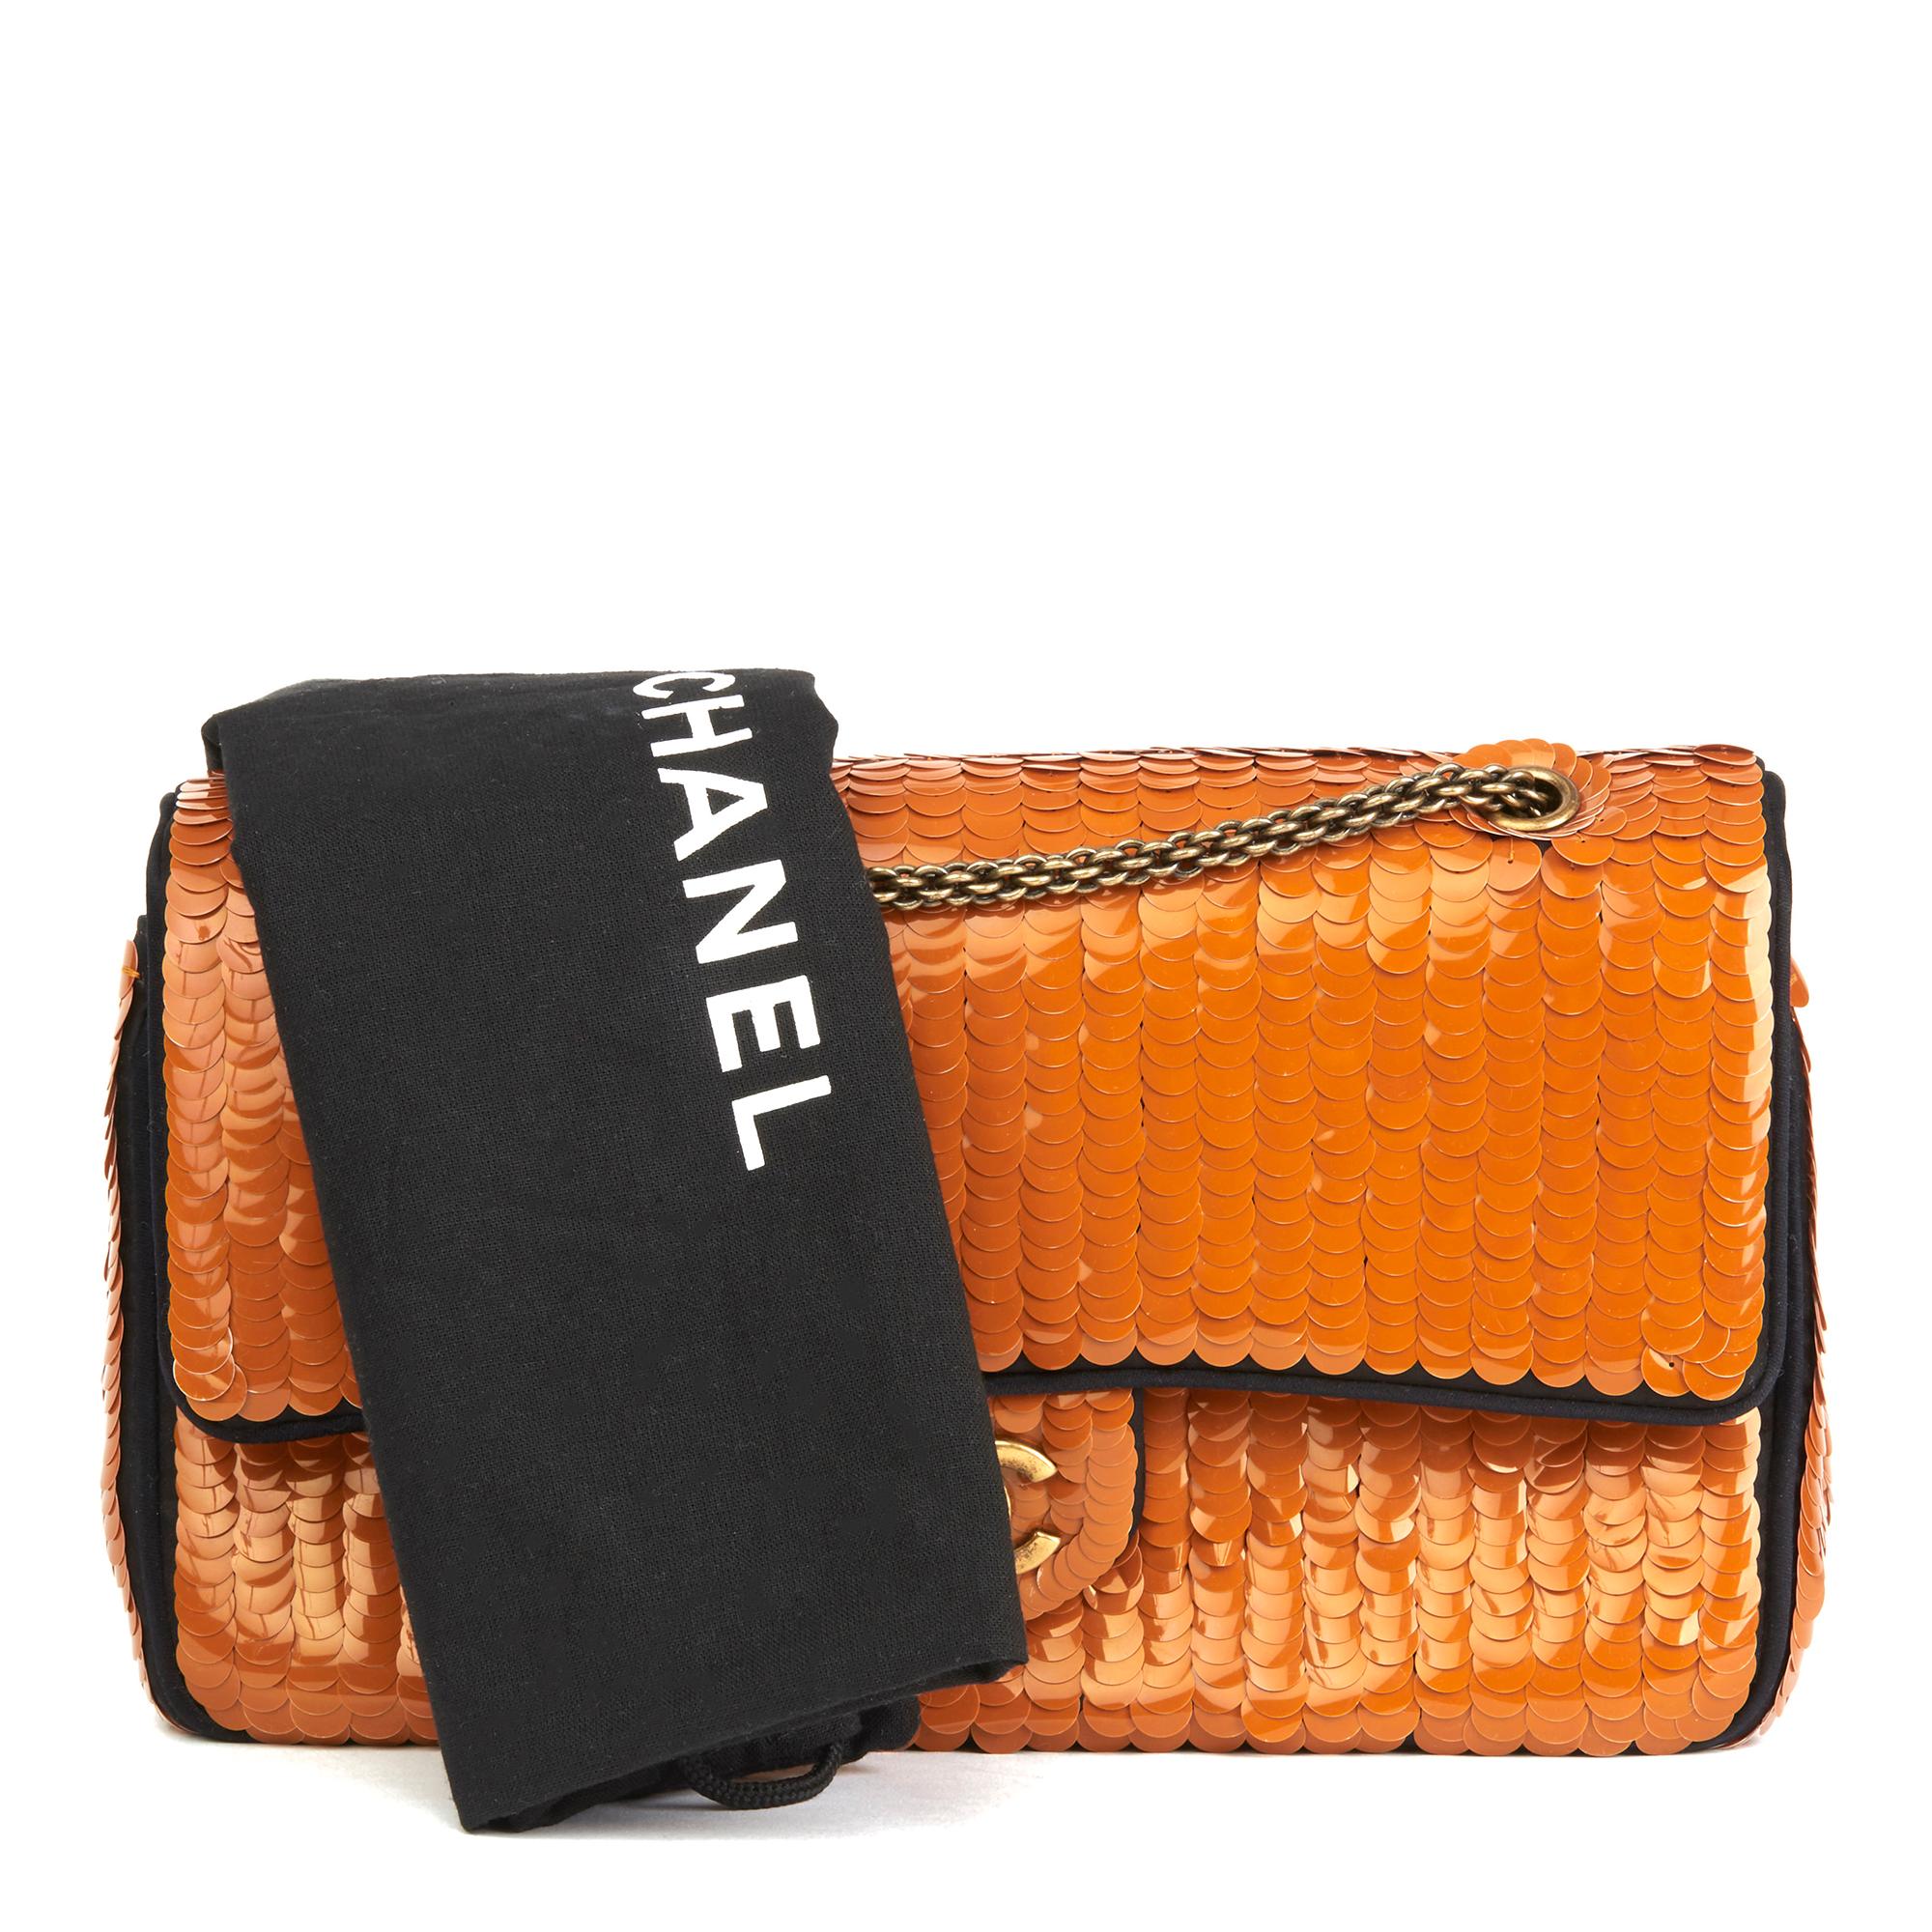 2010 Chanel Black Satin & Orange Sequin Embellished Medium Classic Double Flap  6